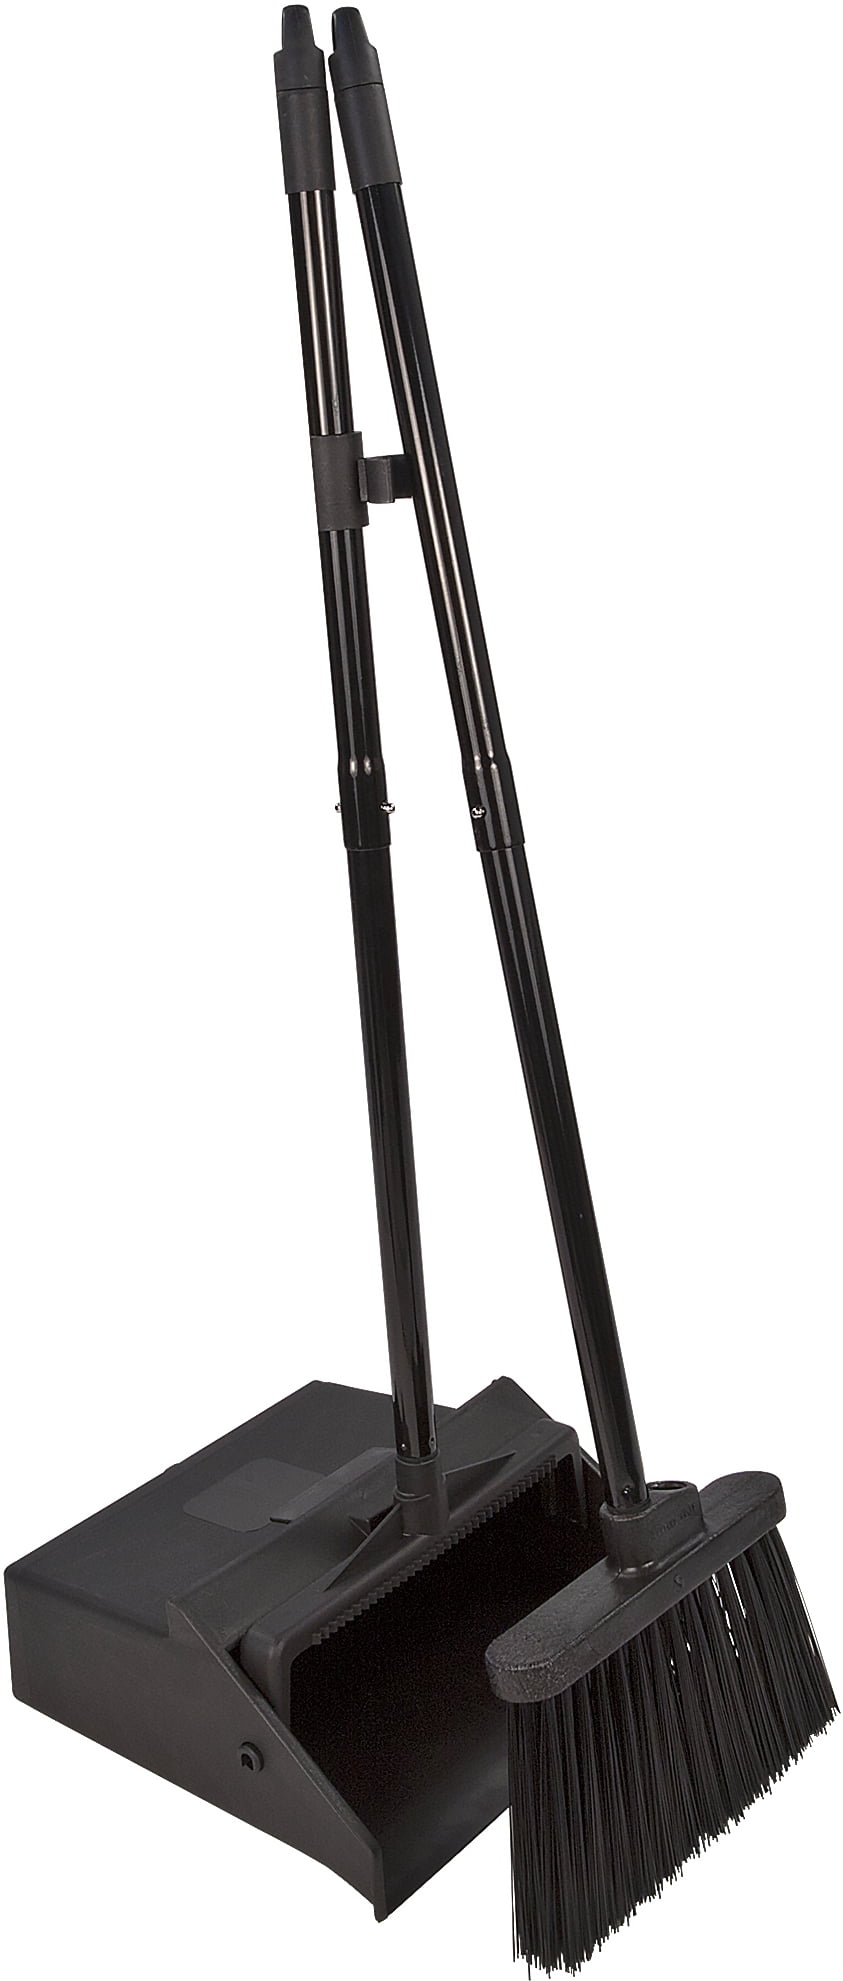 11 in. Black/Gray Upright Broom and Dustpan Set TG07-KJ027 - The Home Depot